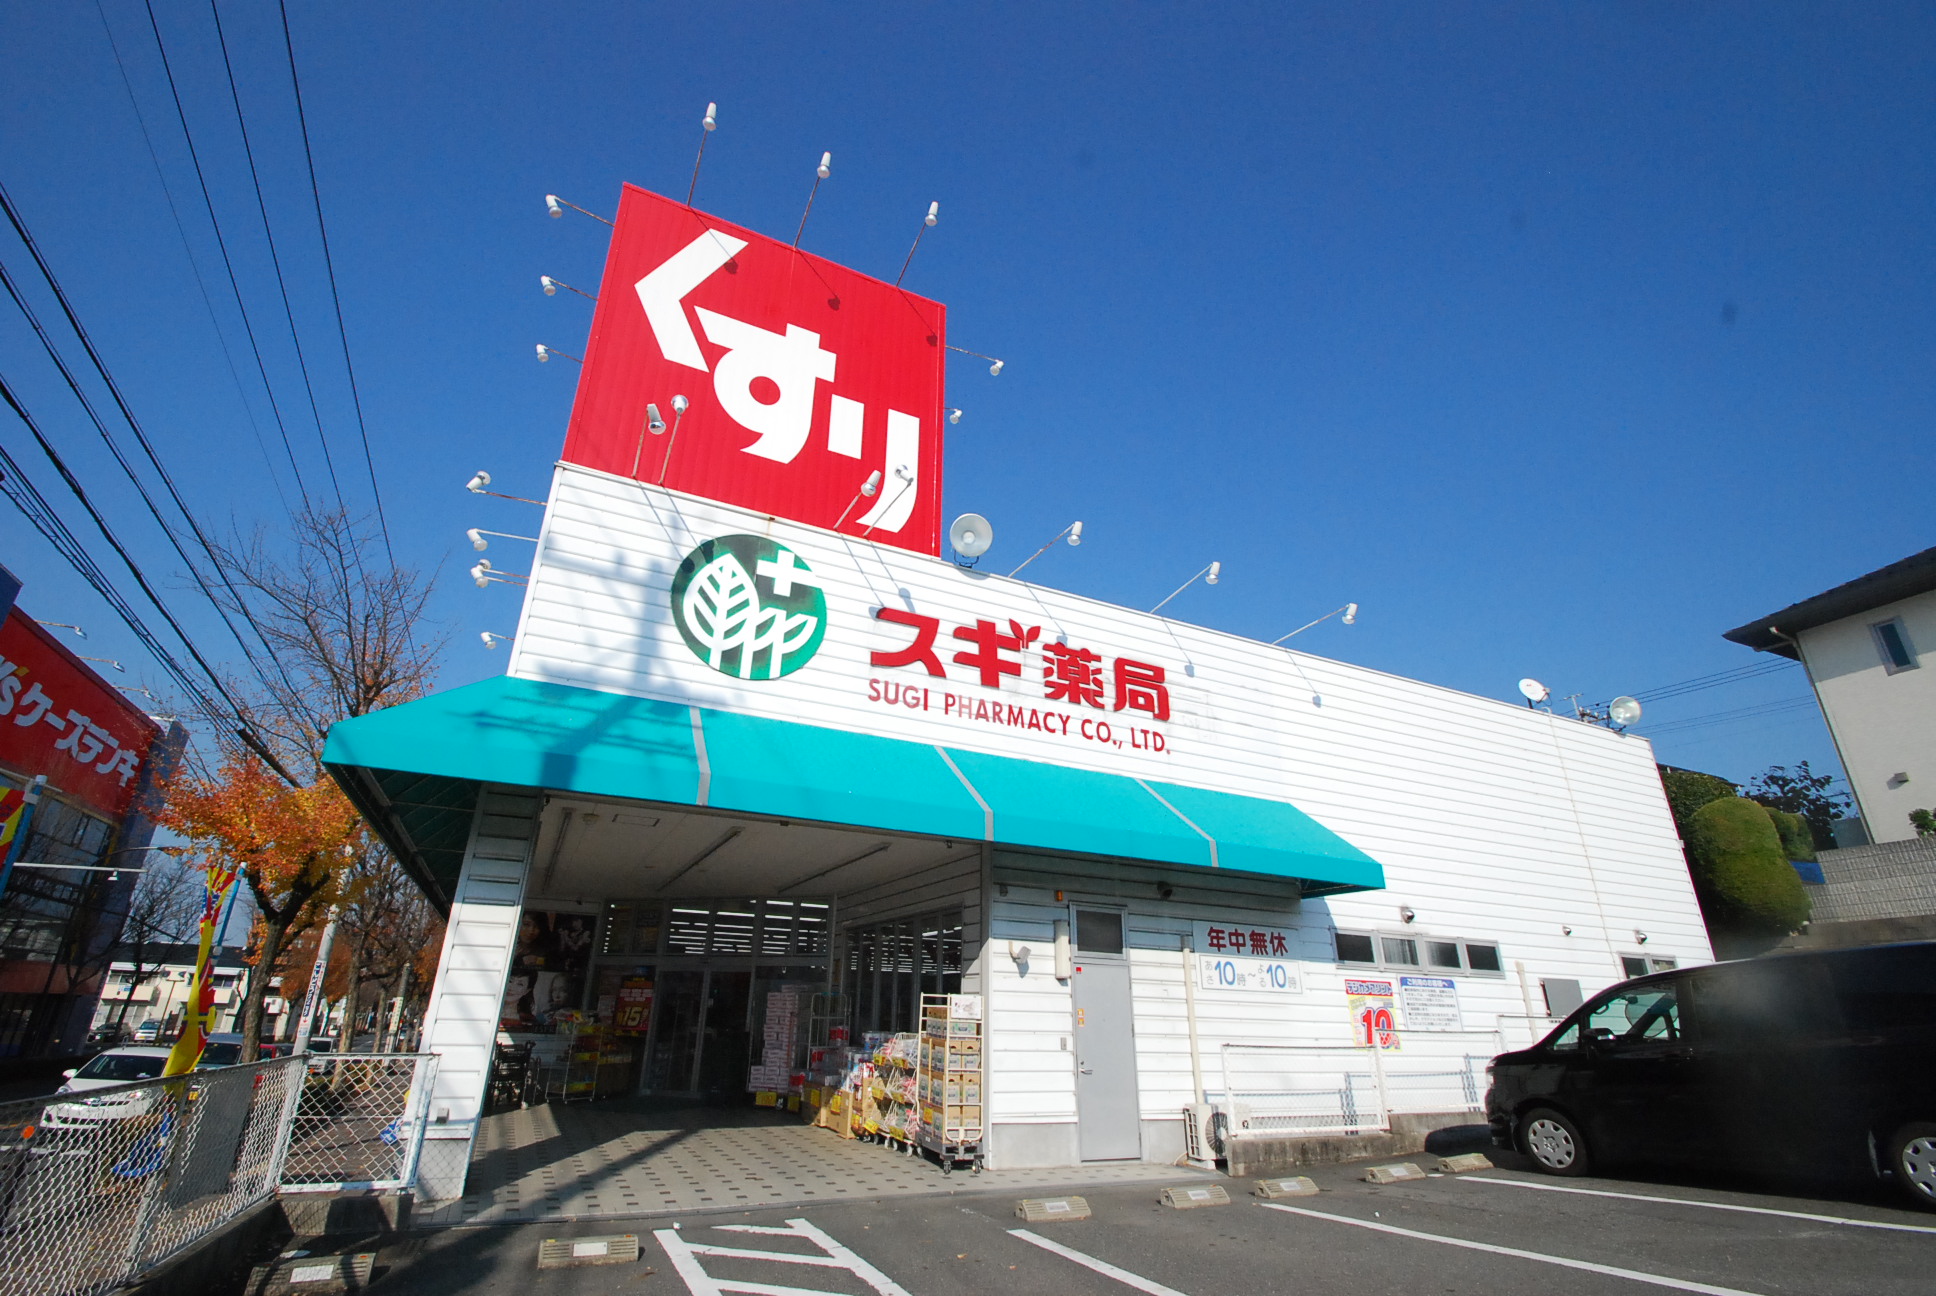 Dorakkusutoa. Cedar pharmacy Takabari shop 717m until (drugstore)